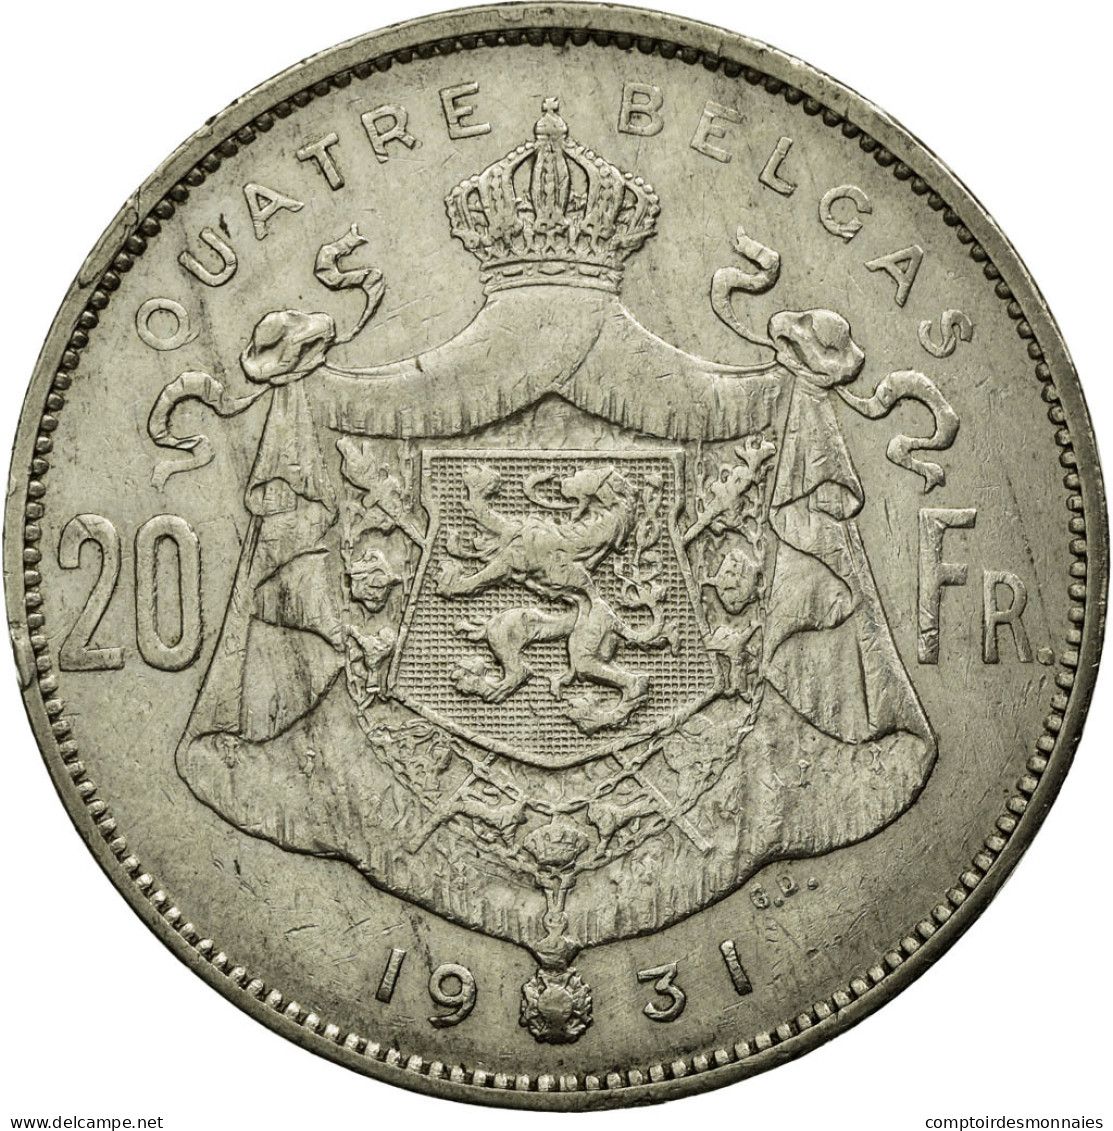 Monnaie, Belgique, 20 Francs, 20 Frank, 1931, TTB, Nickel - 20 Francs & 4 Belgas